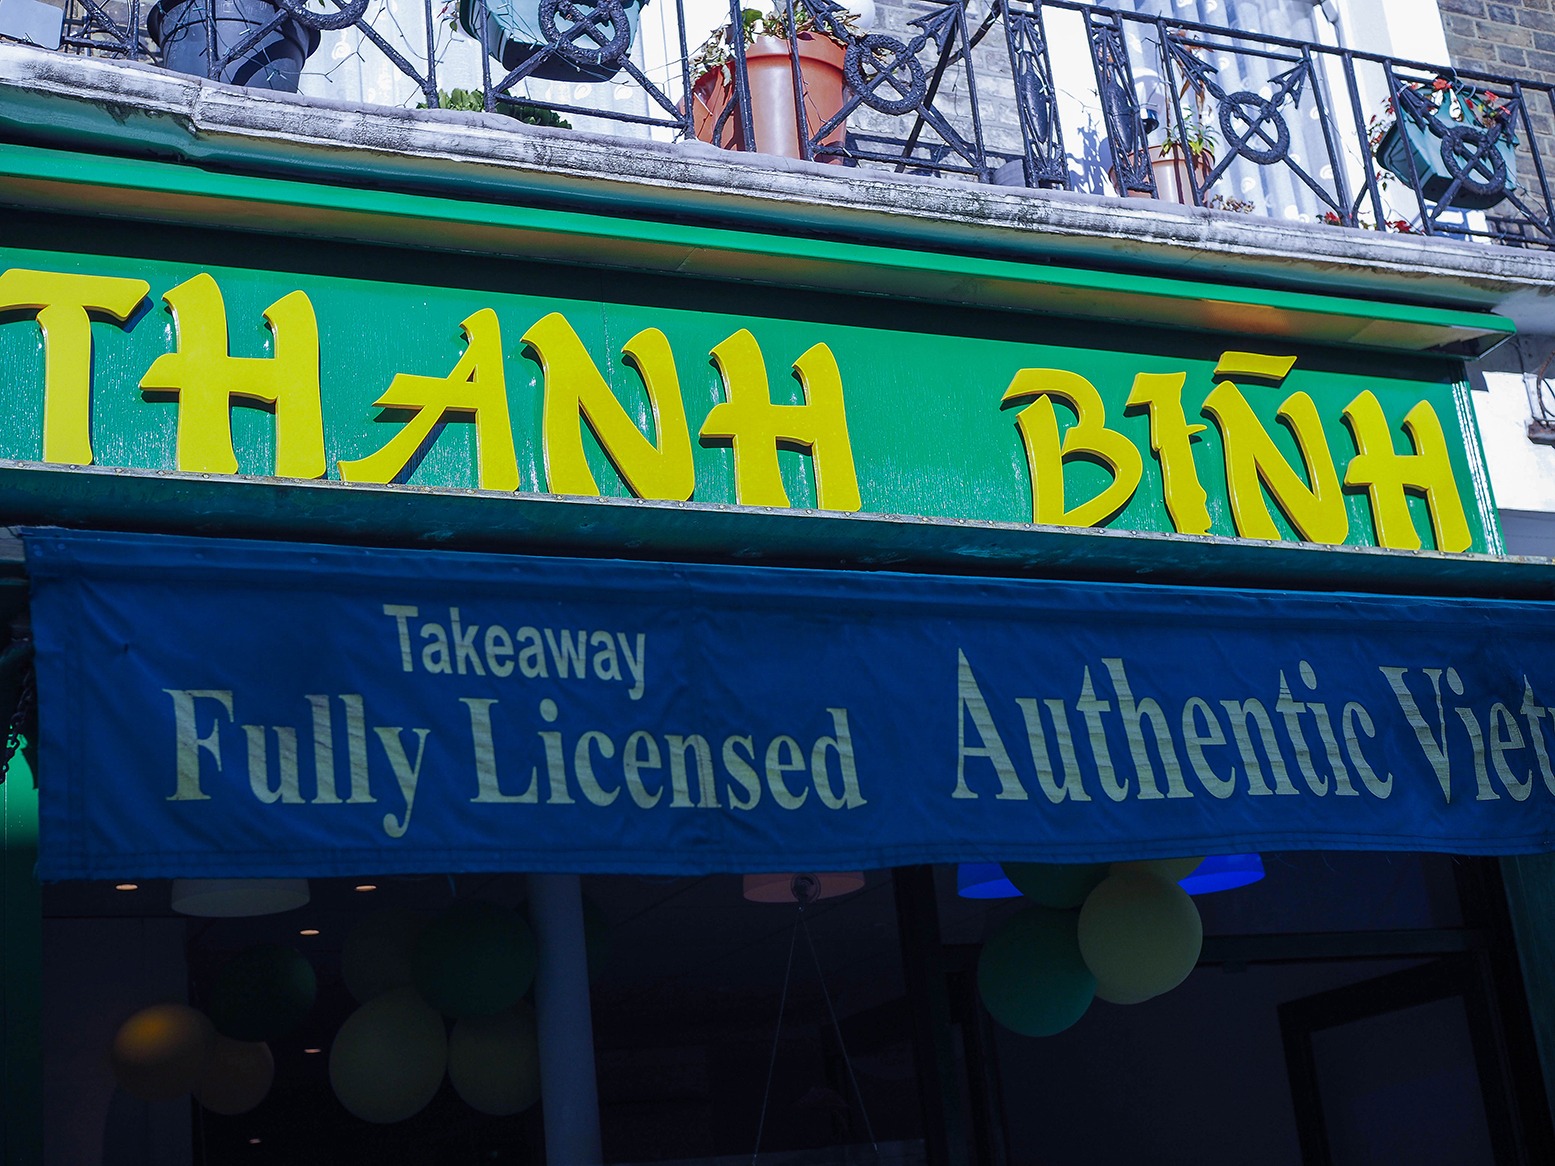 Thanh Binh Camden shop front.